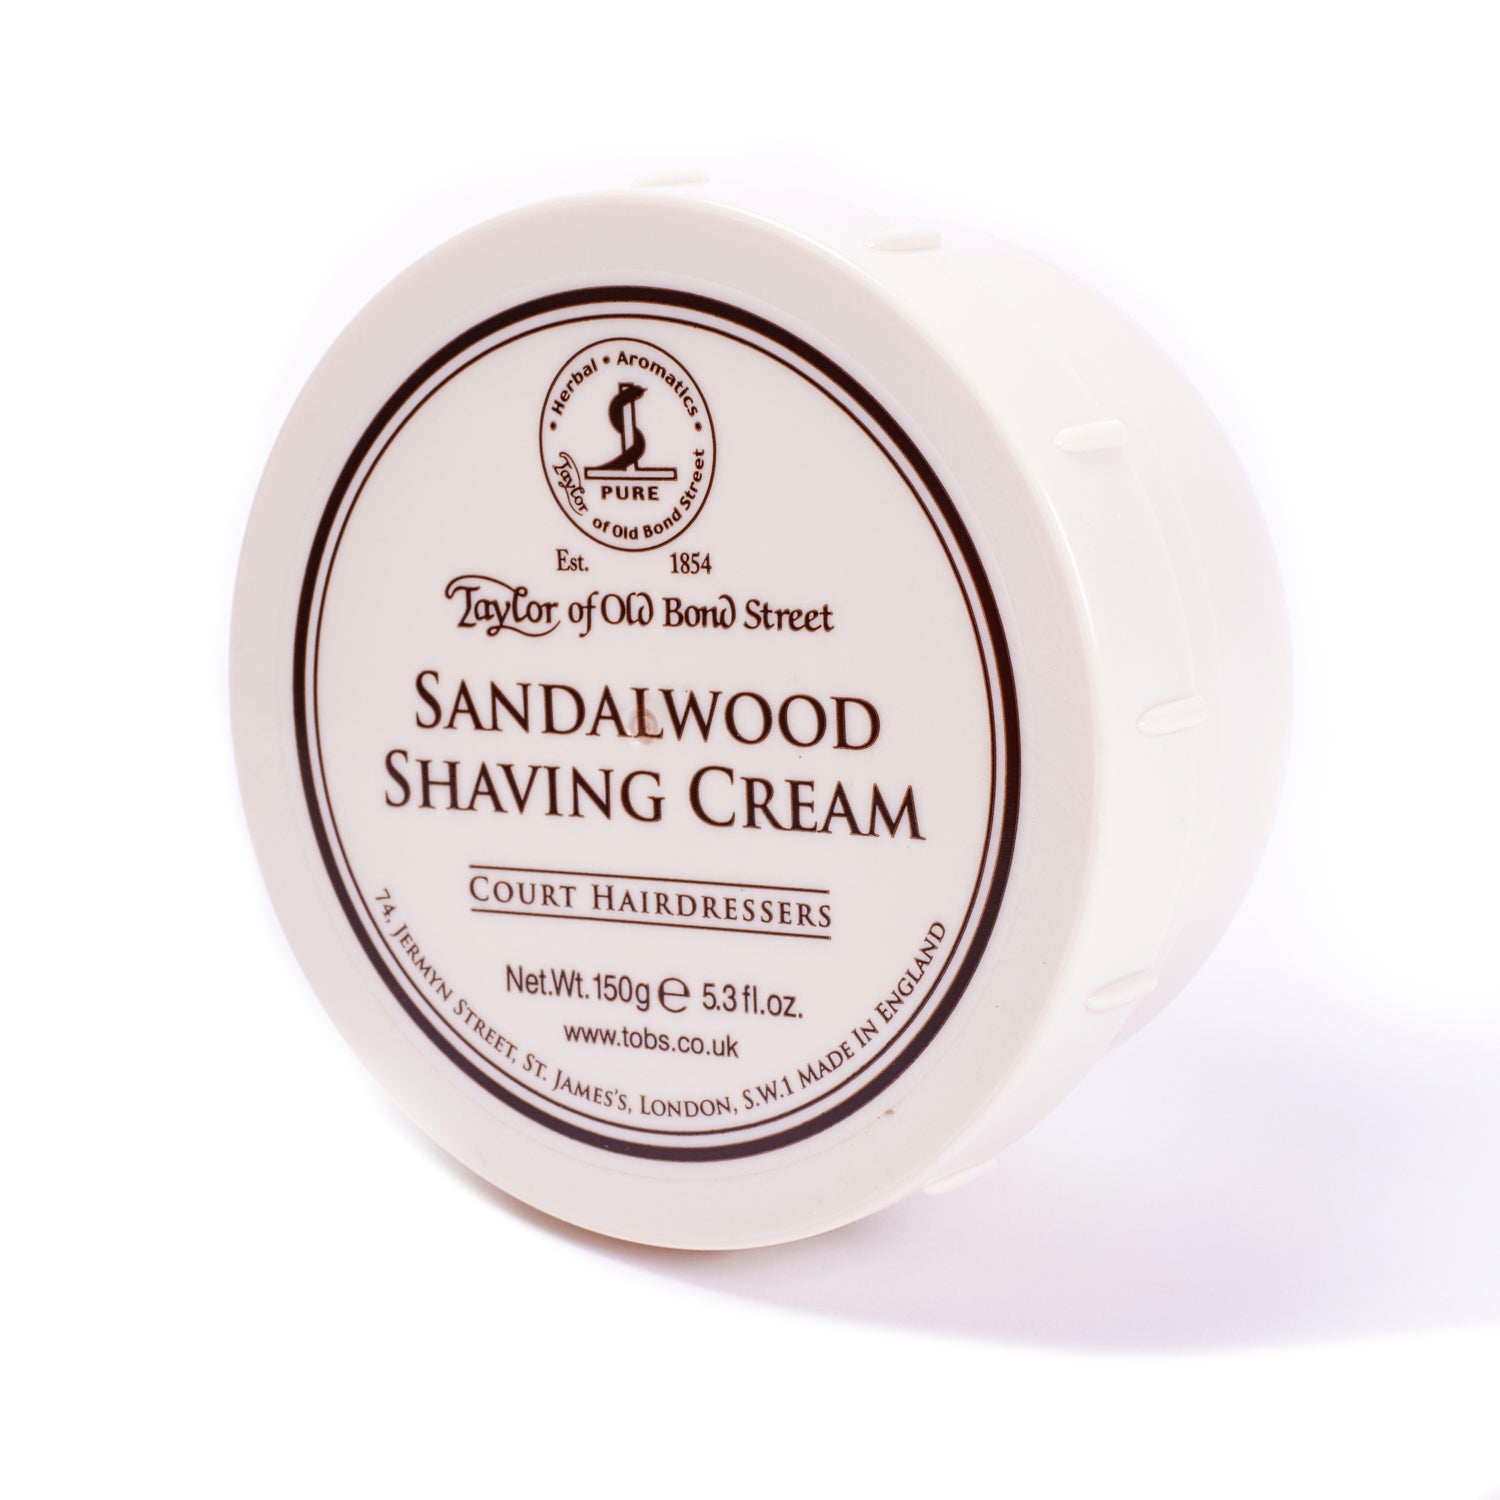 Sandalwood Shaving Cream Bowl by Taylor of Old Bond Street